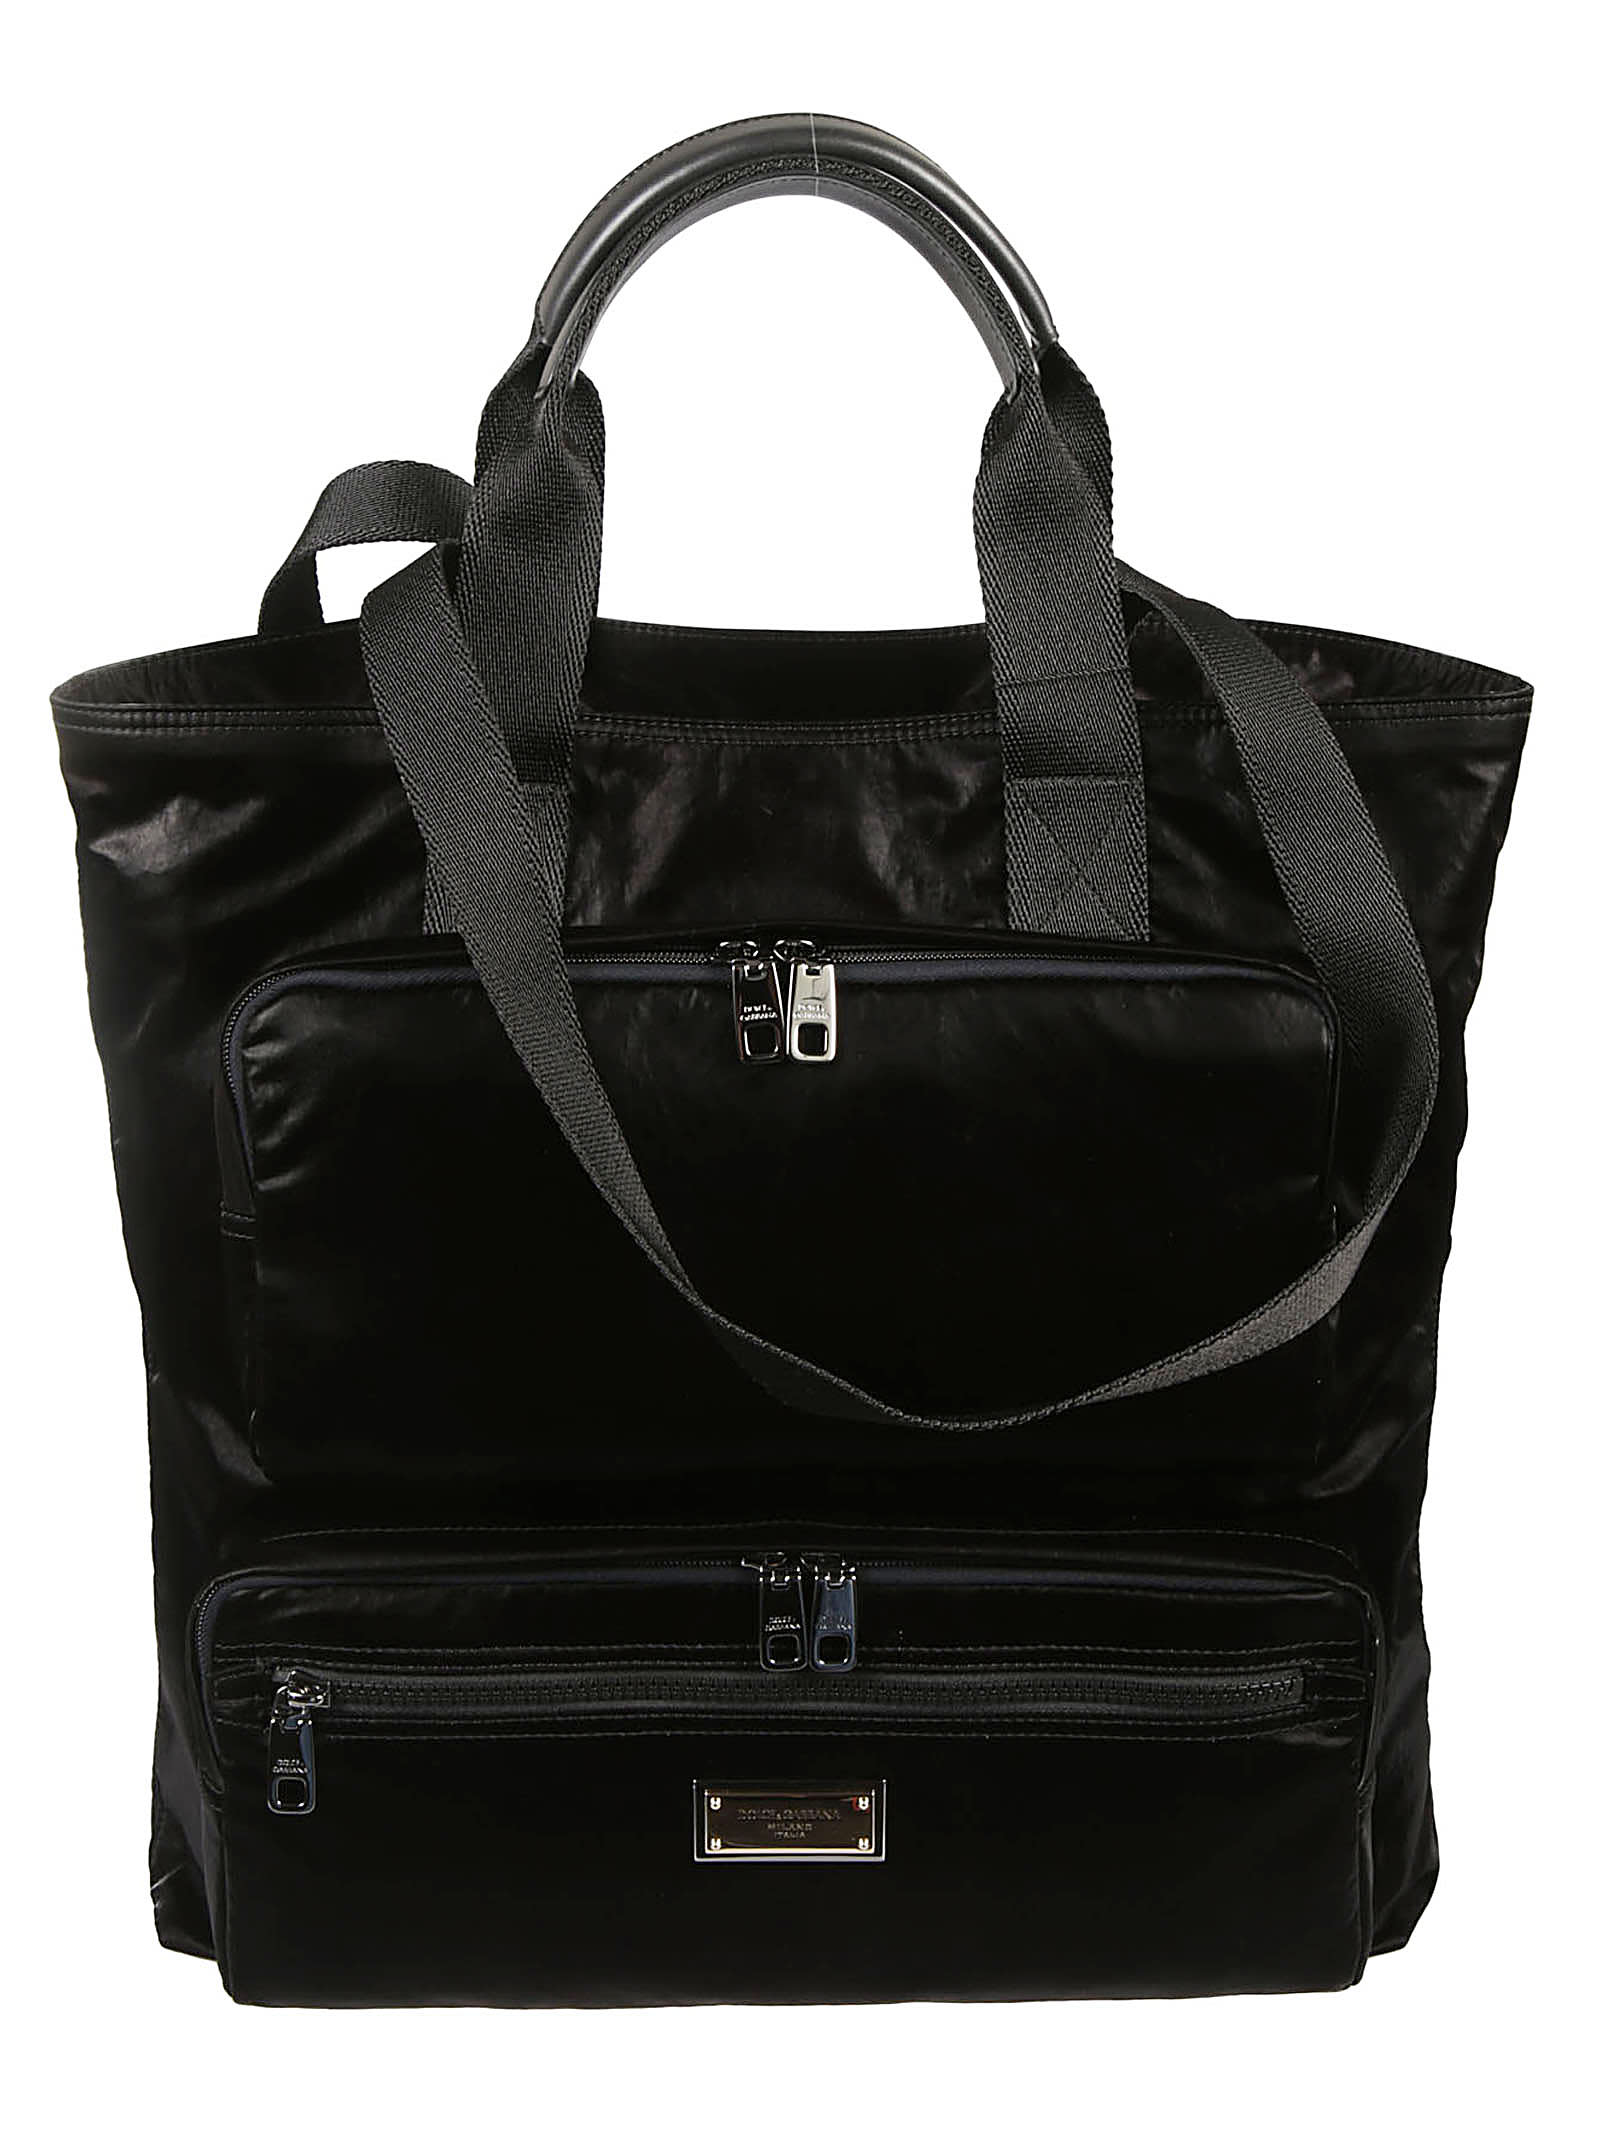 Dolce & Gabbana Front Pockets Shopper Bag